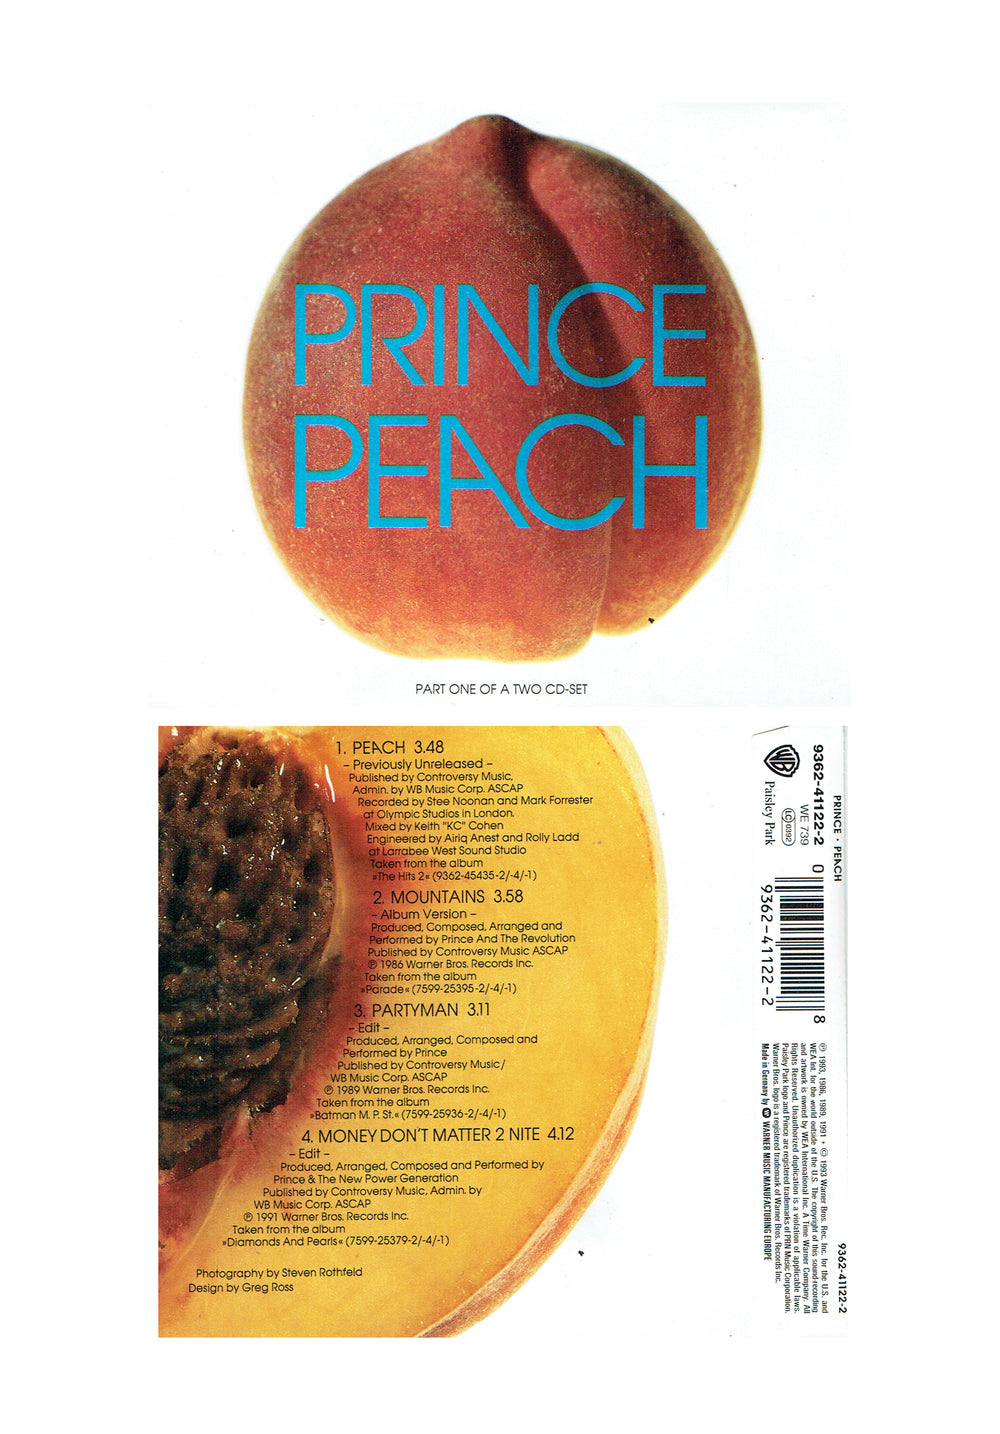 Prince – Peach CD Single Jewel Case Part 2 Of A 2 Preloved: 1993